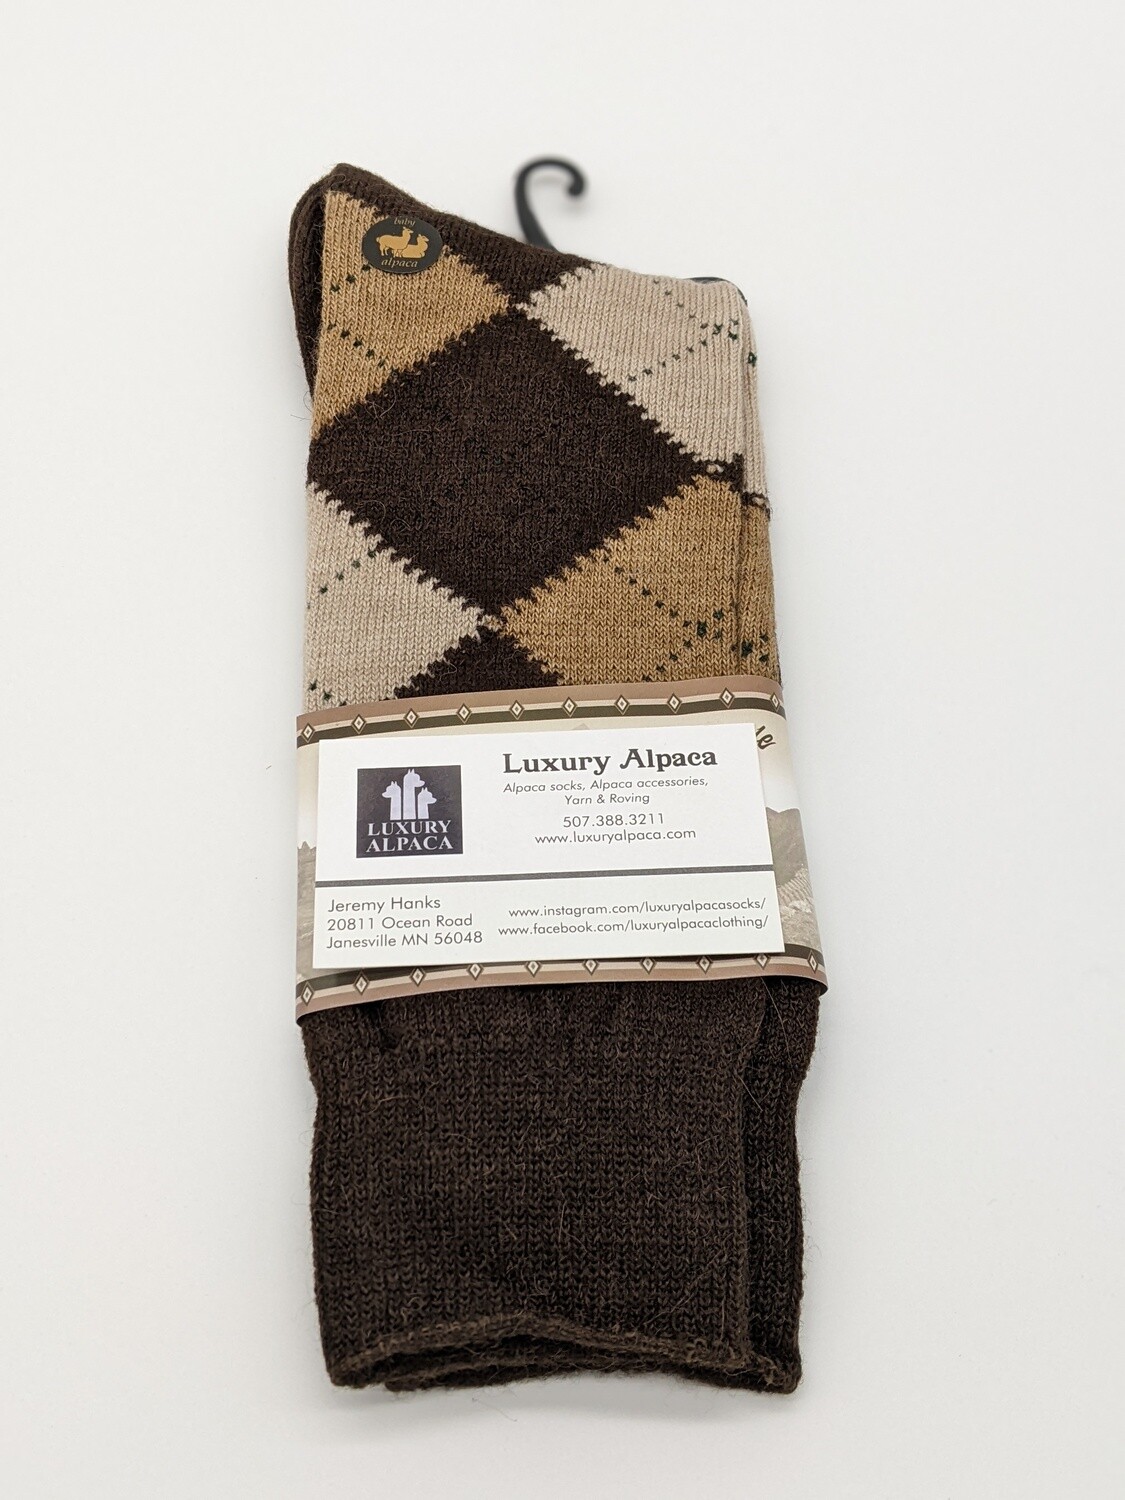 Alpaca Argyle Dress Socks